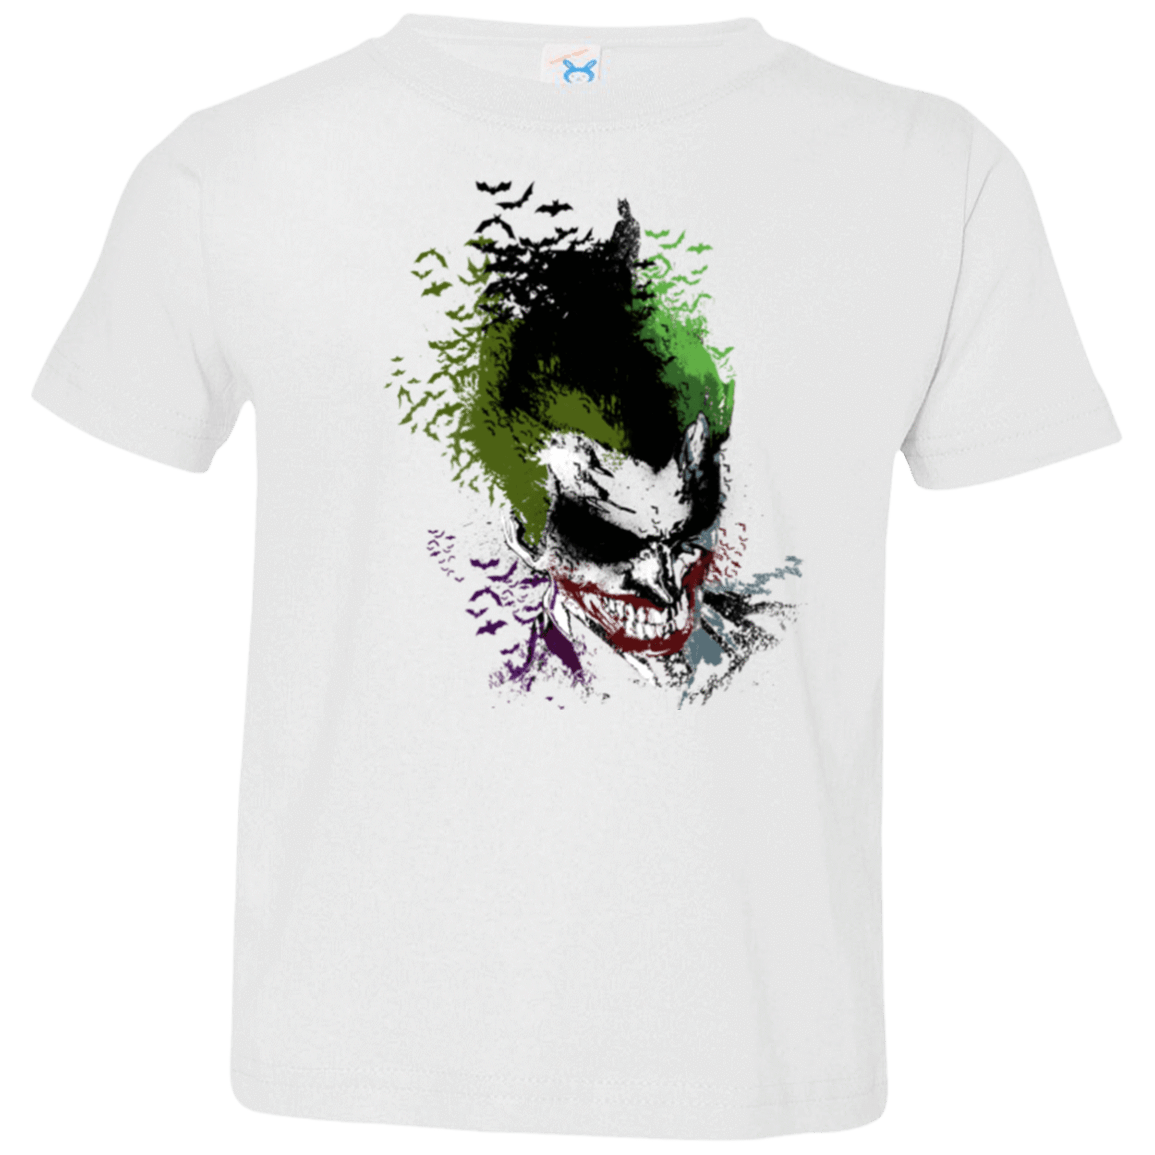 T-Shirts White / 2T Joker 2 Toddler Premium T-Shirt